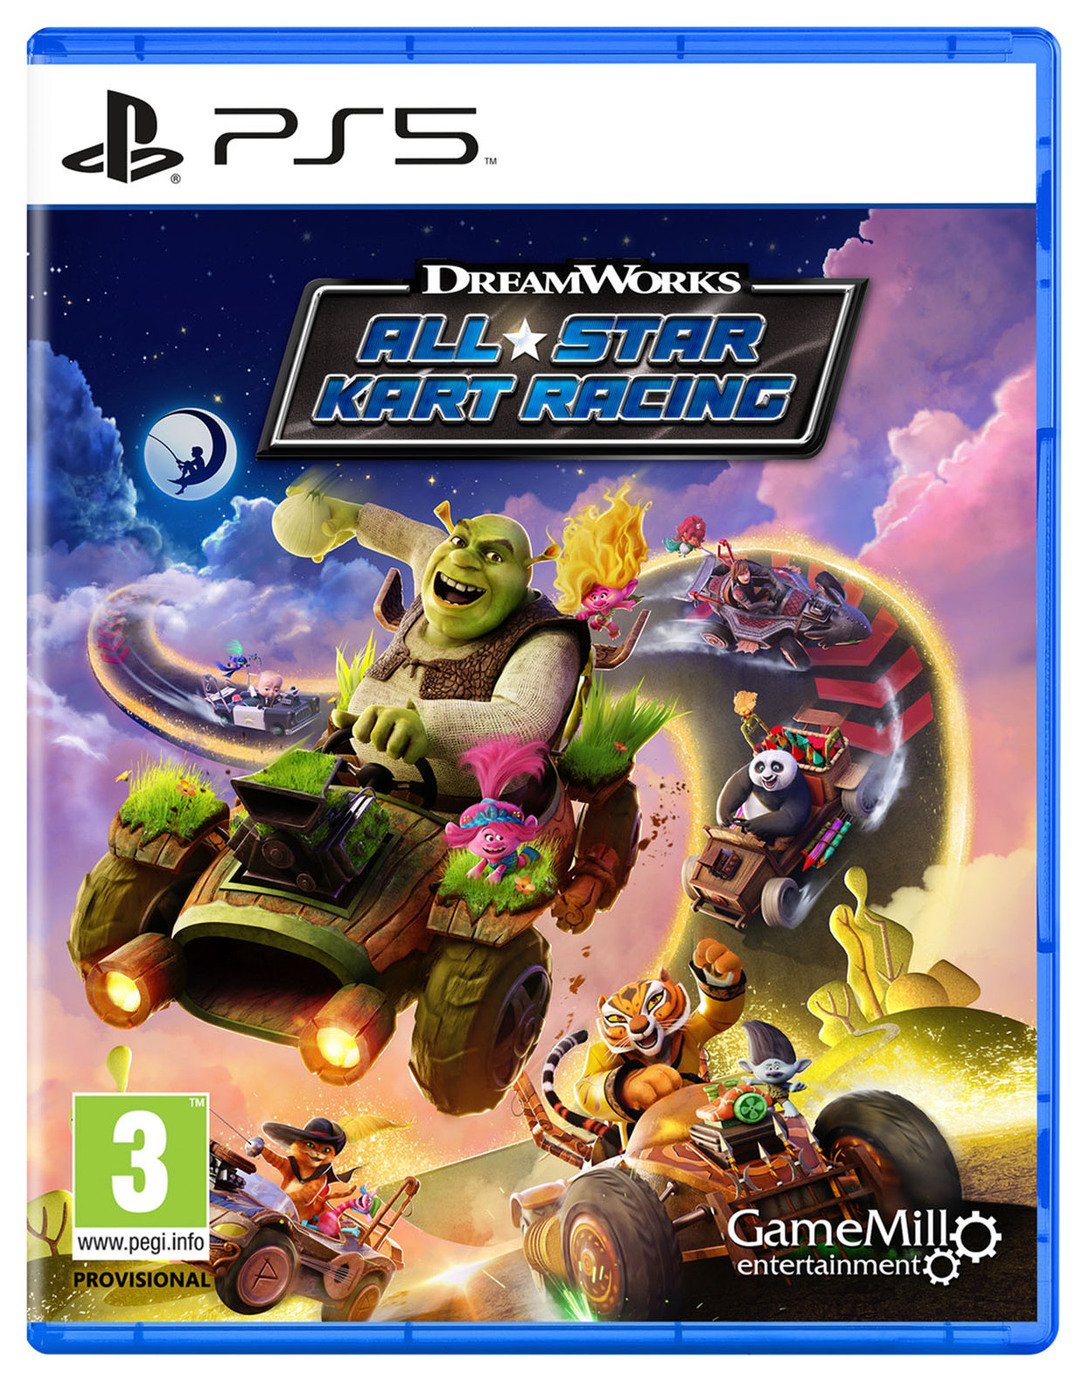 DreamWorks All-Star Kart Racing PS5 Game